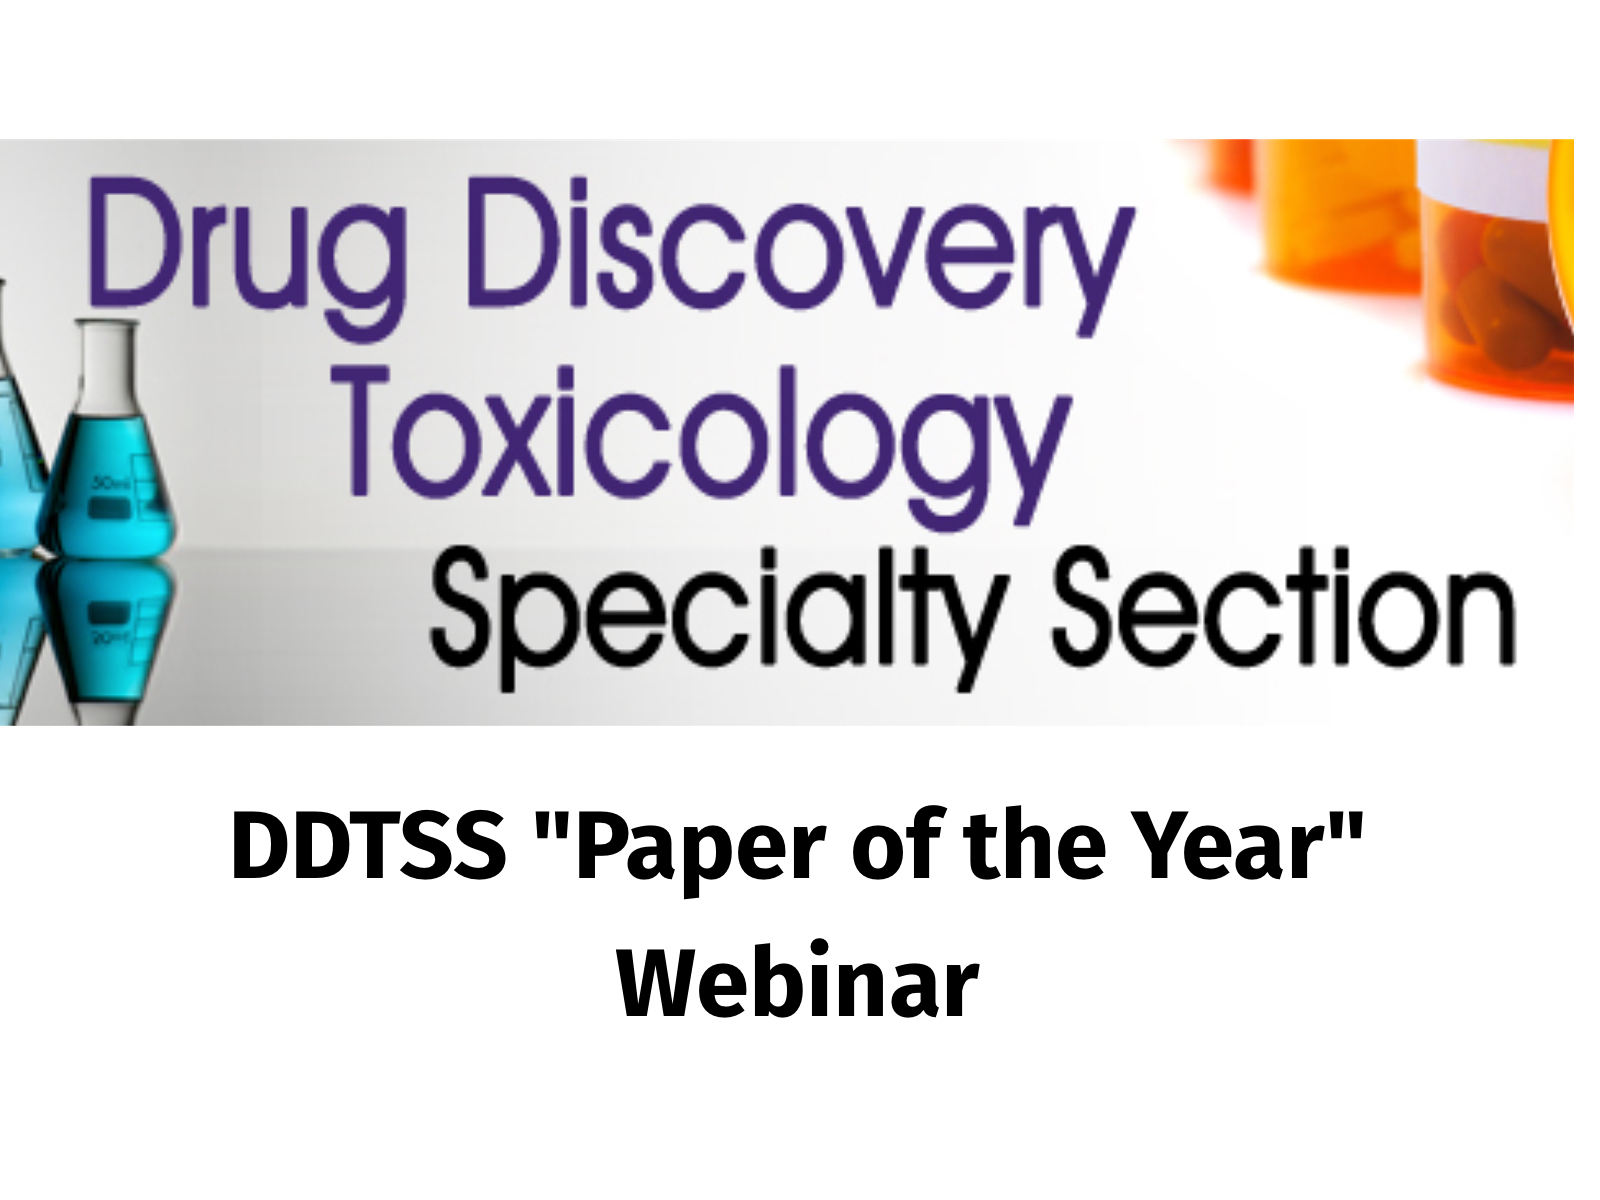 DDTSS Paper of the Year Webinar